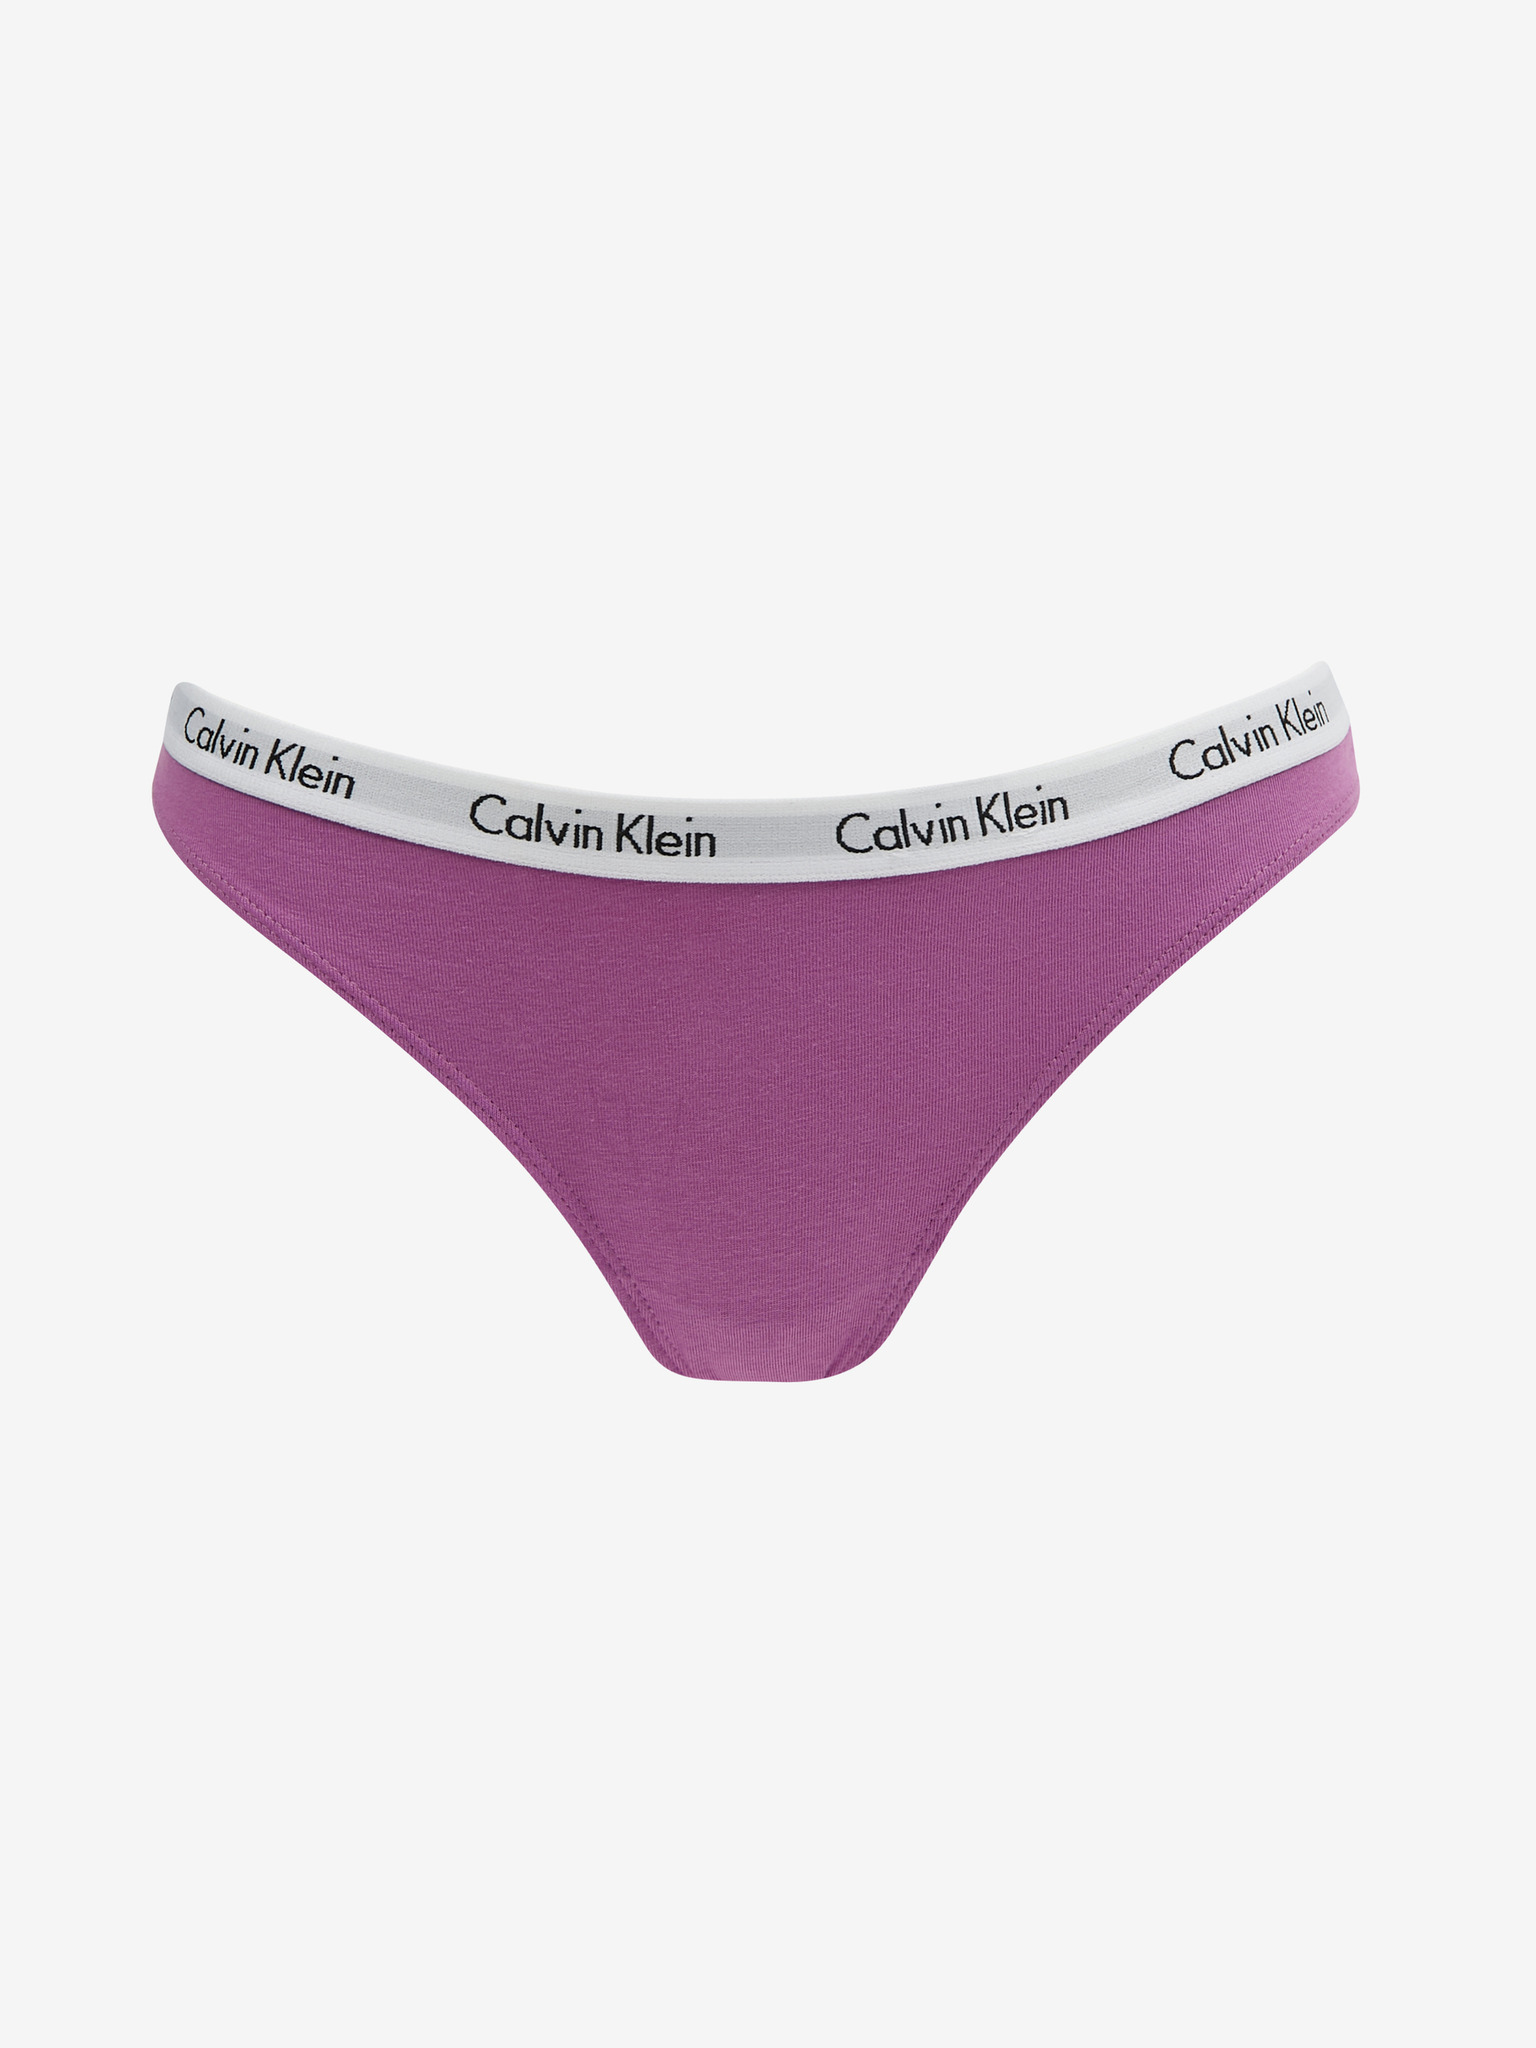 Calvin Klein Underwear THONG - Thong - very berry/purple - Zalando